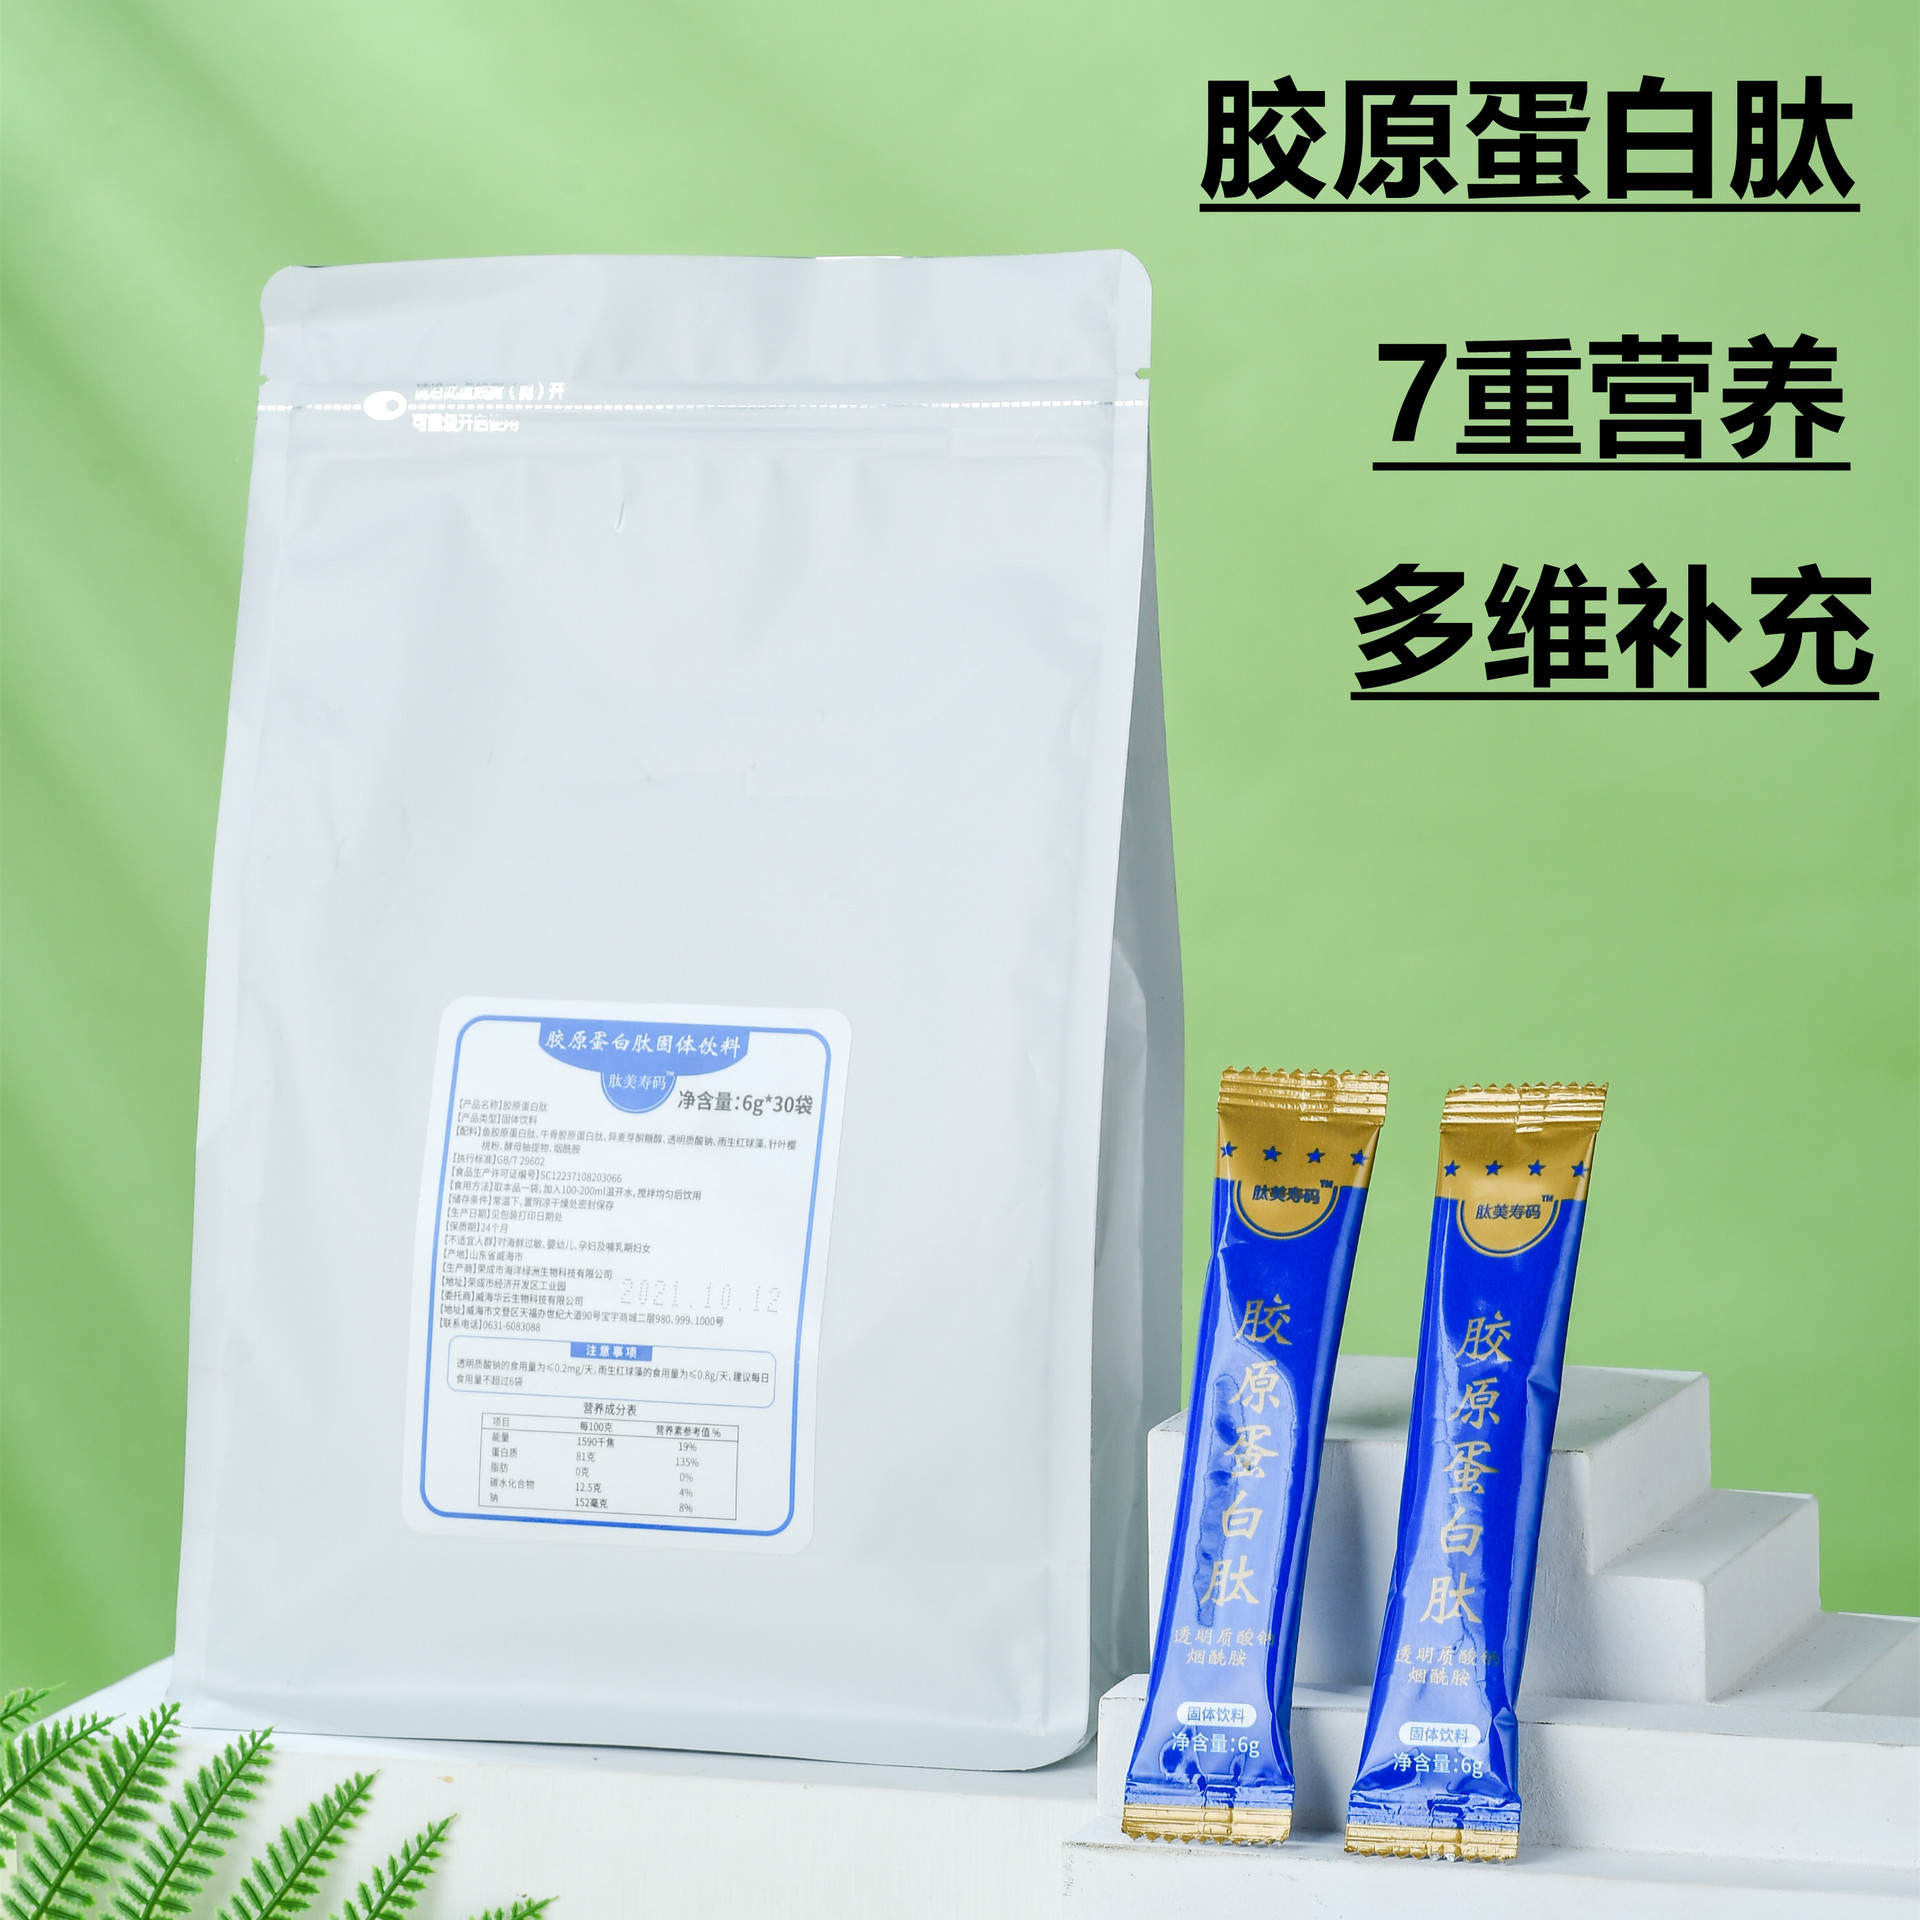 Cod Collagen peptide ossotide hyaluronic acid Nicotinamide Glutathione 7 Nutrition goods in stock Bagged